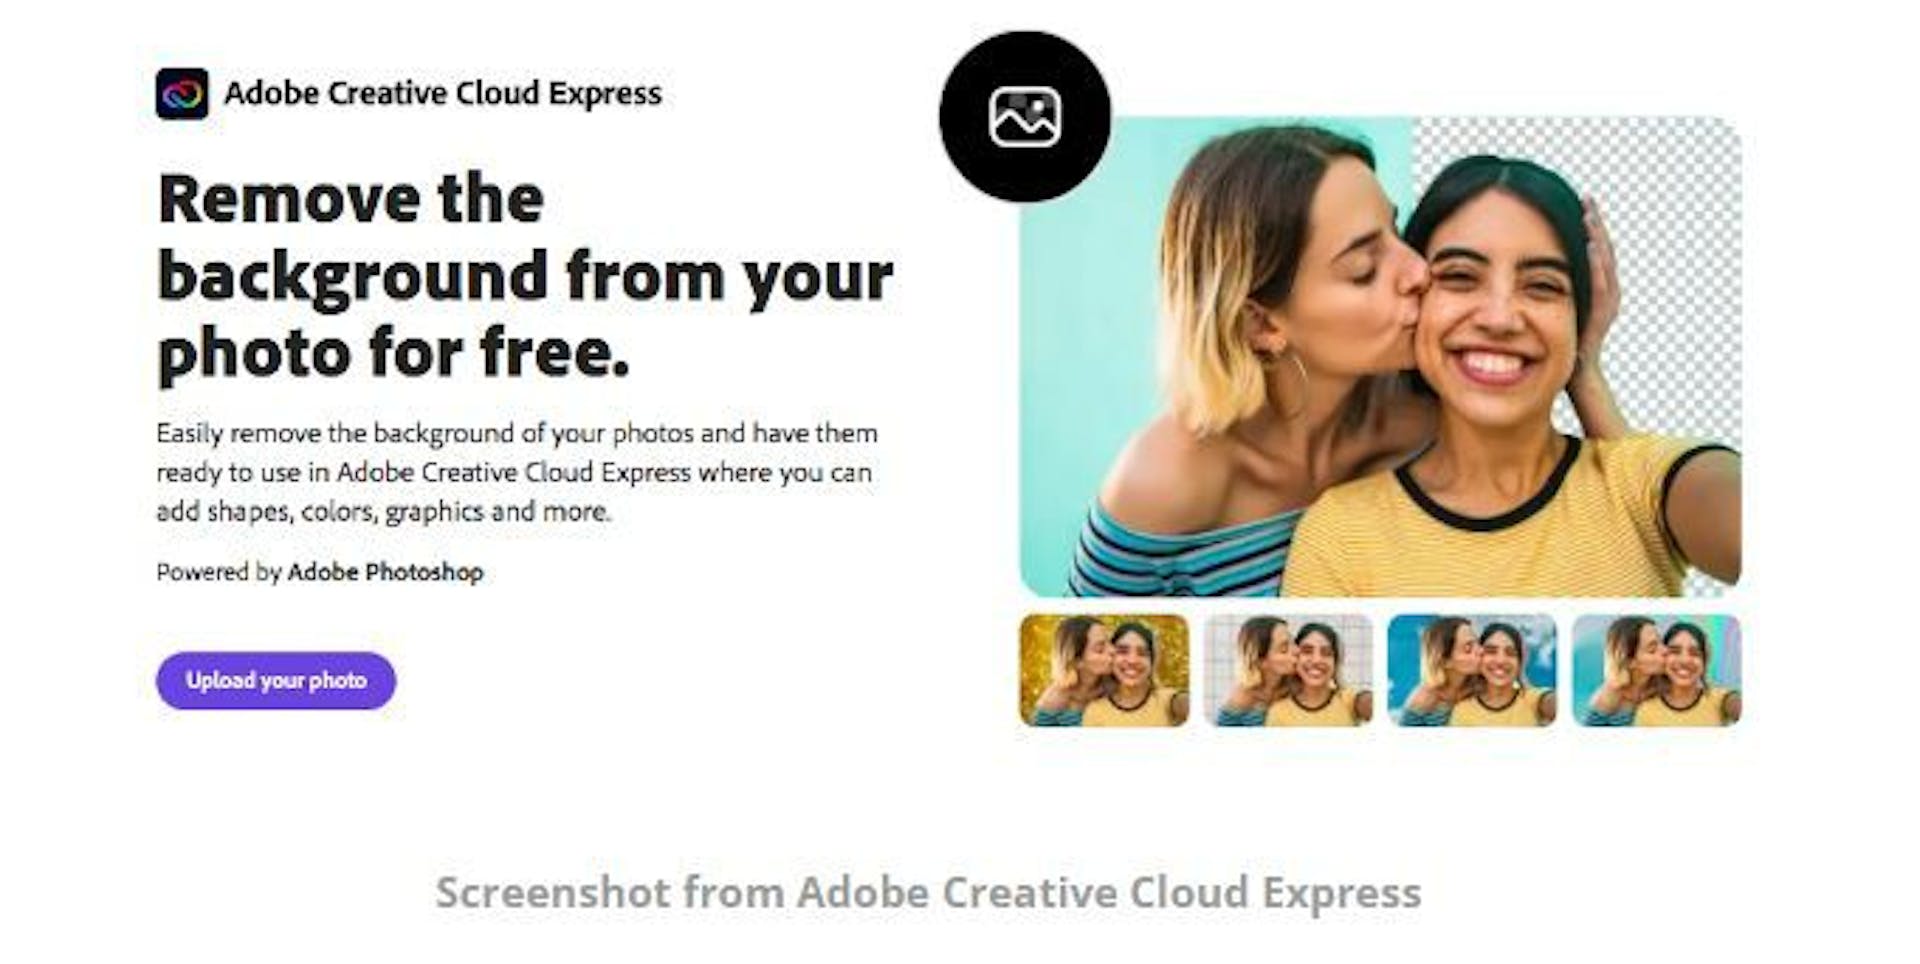 Adobe Creative Cloud Express 製品ページの明確な構造